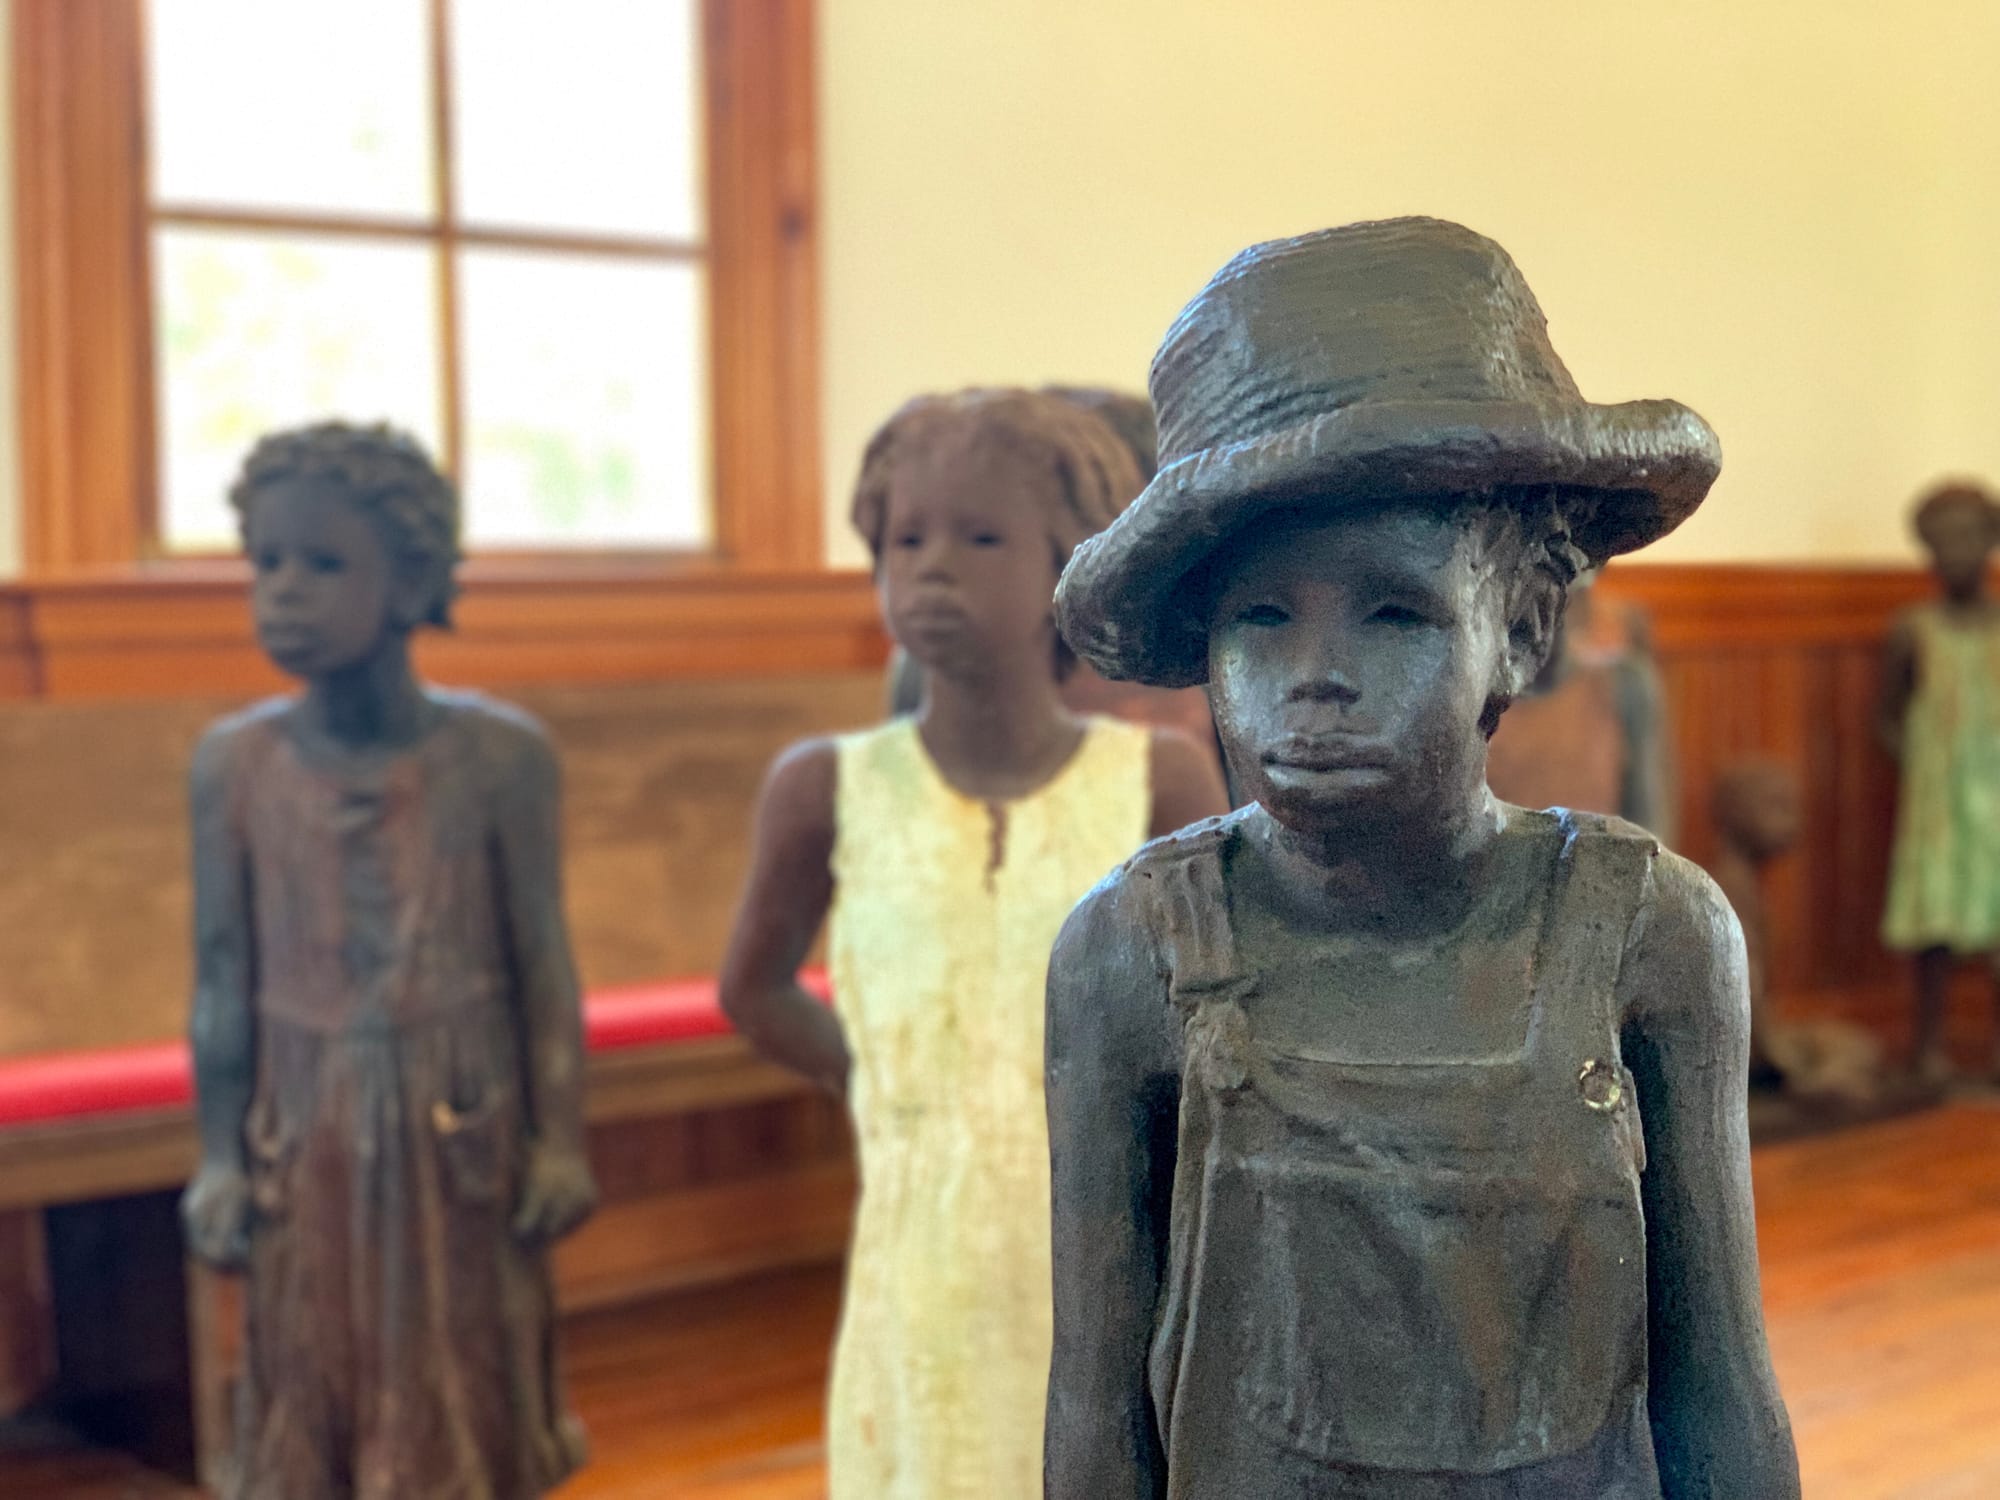 Visiting the Whitney Plantation/Slavery Museum